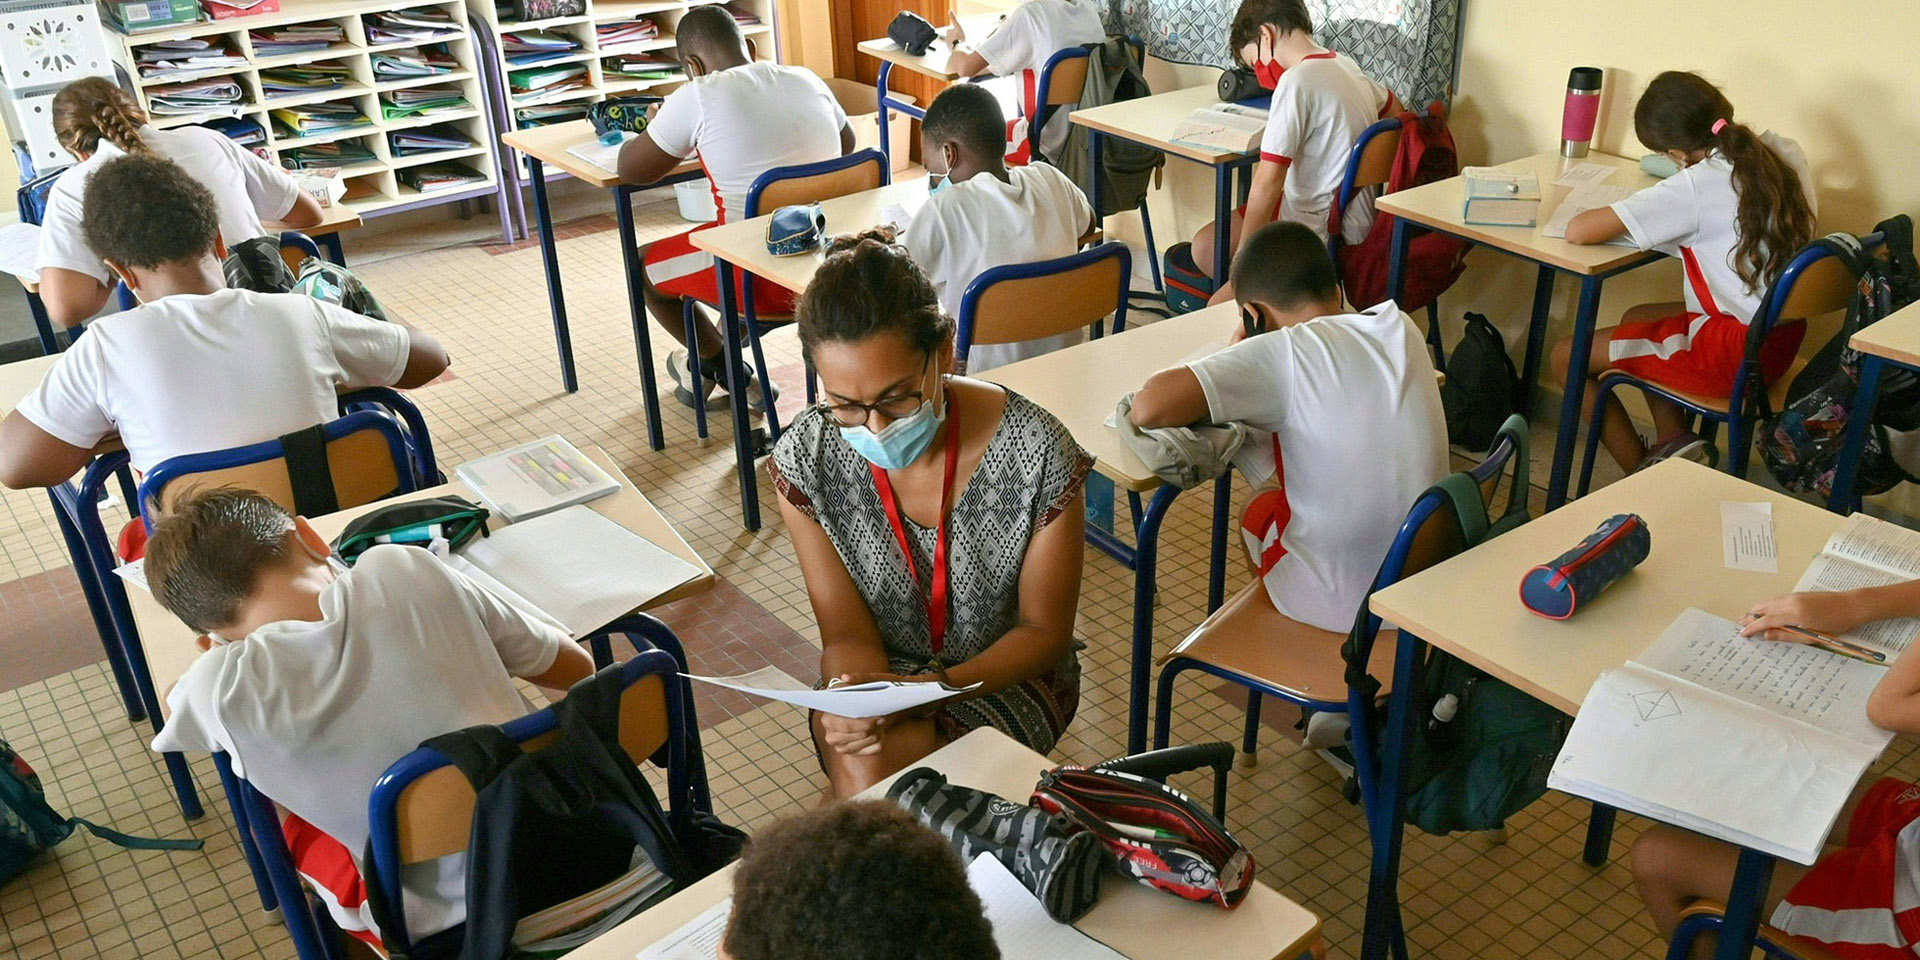 Children are sitting between school desks. The teacher helps them with their schoolwork.